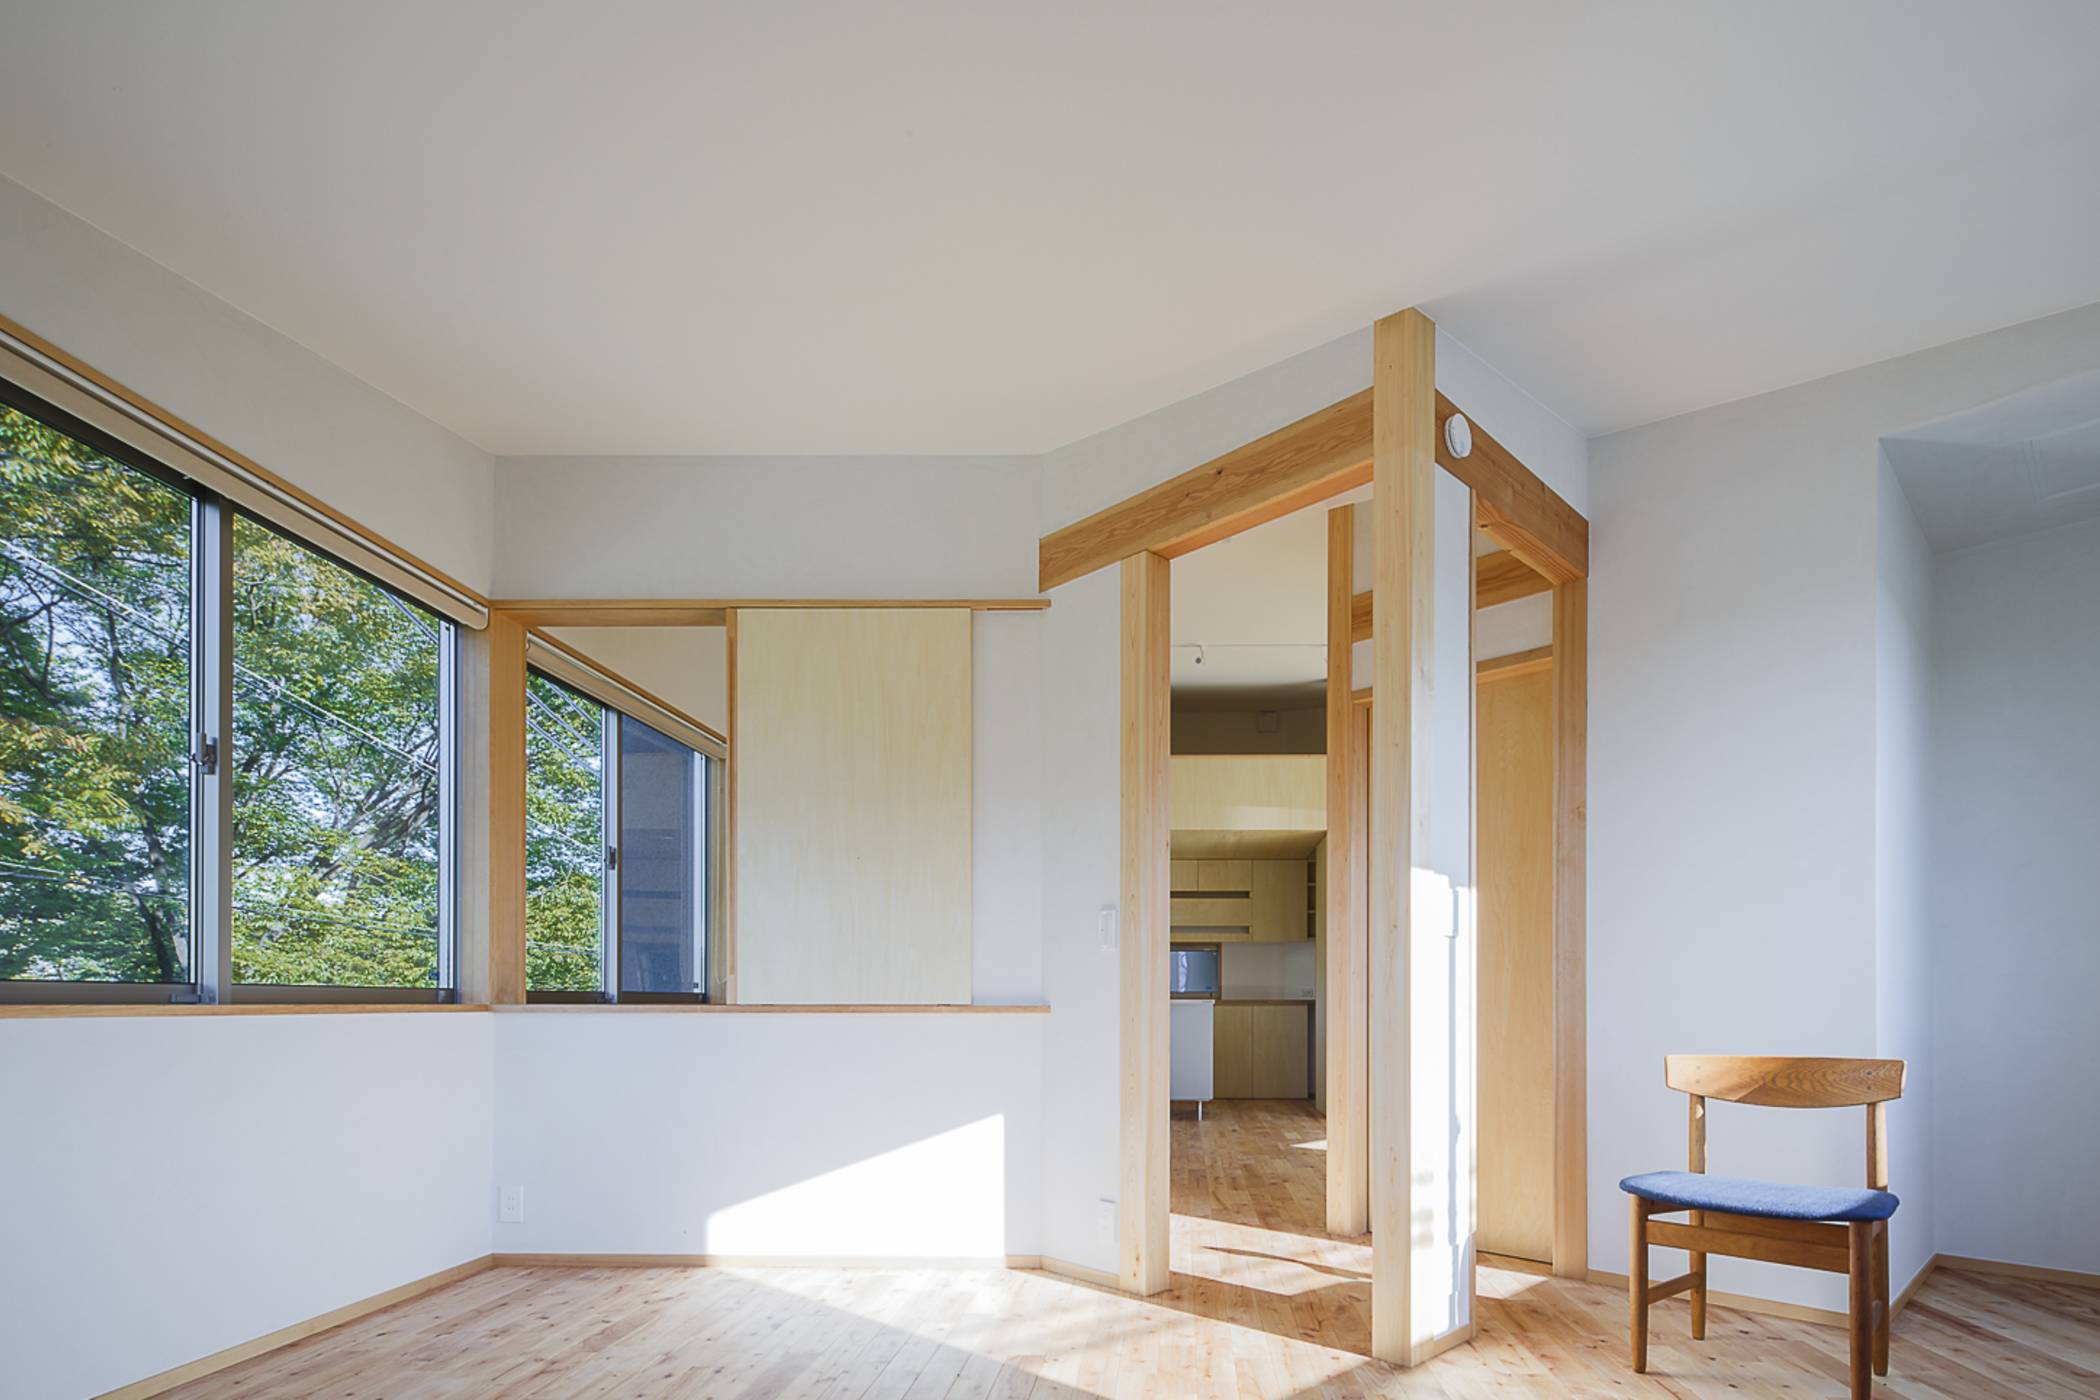 Y Kyoko’s House by Ogasawara Architecture Lab